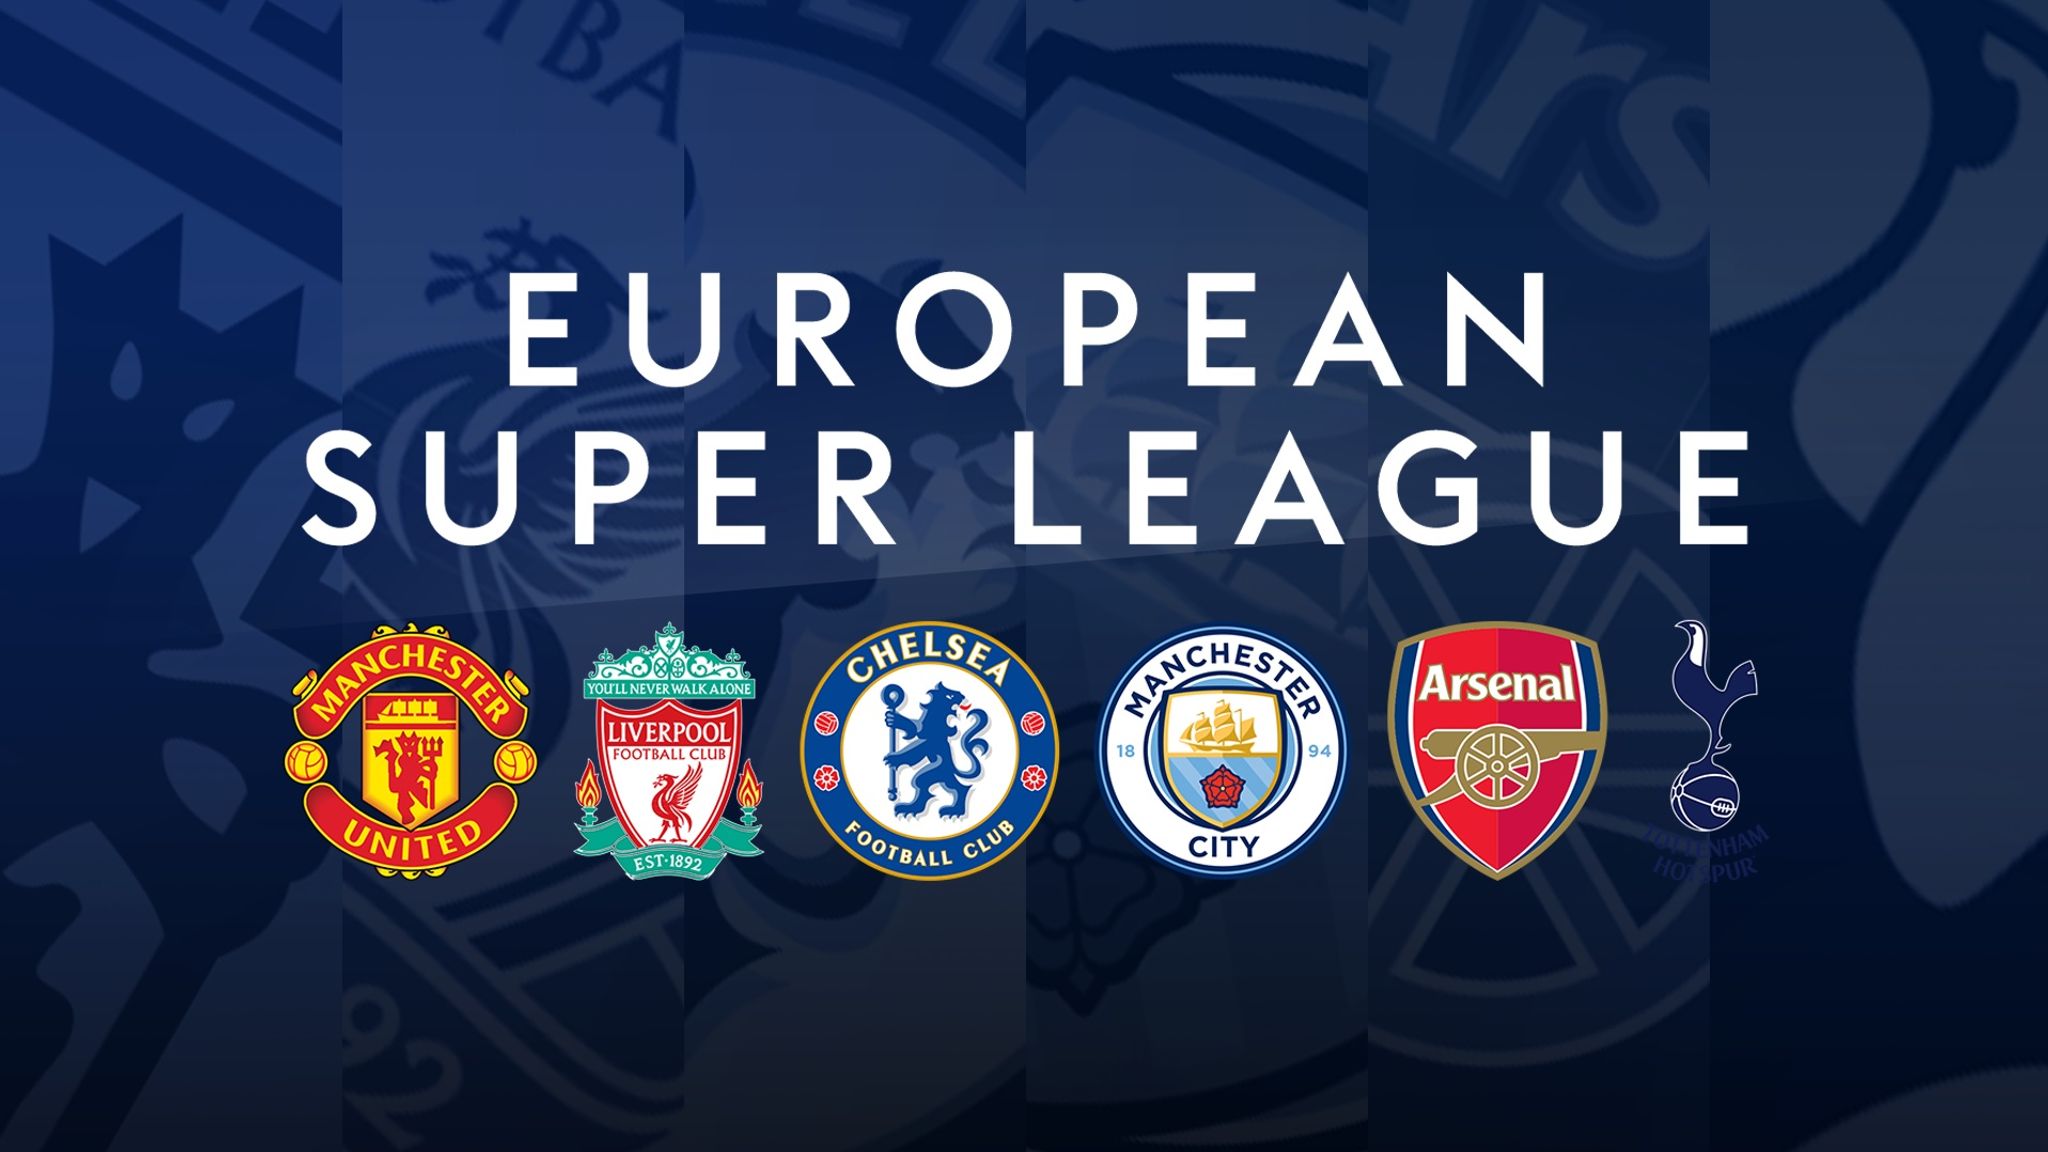 European Super League: UEFA and FIFA rules banning breakaway league unlawful, says court